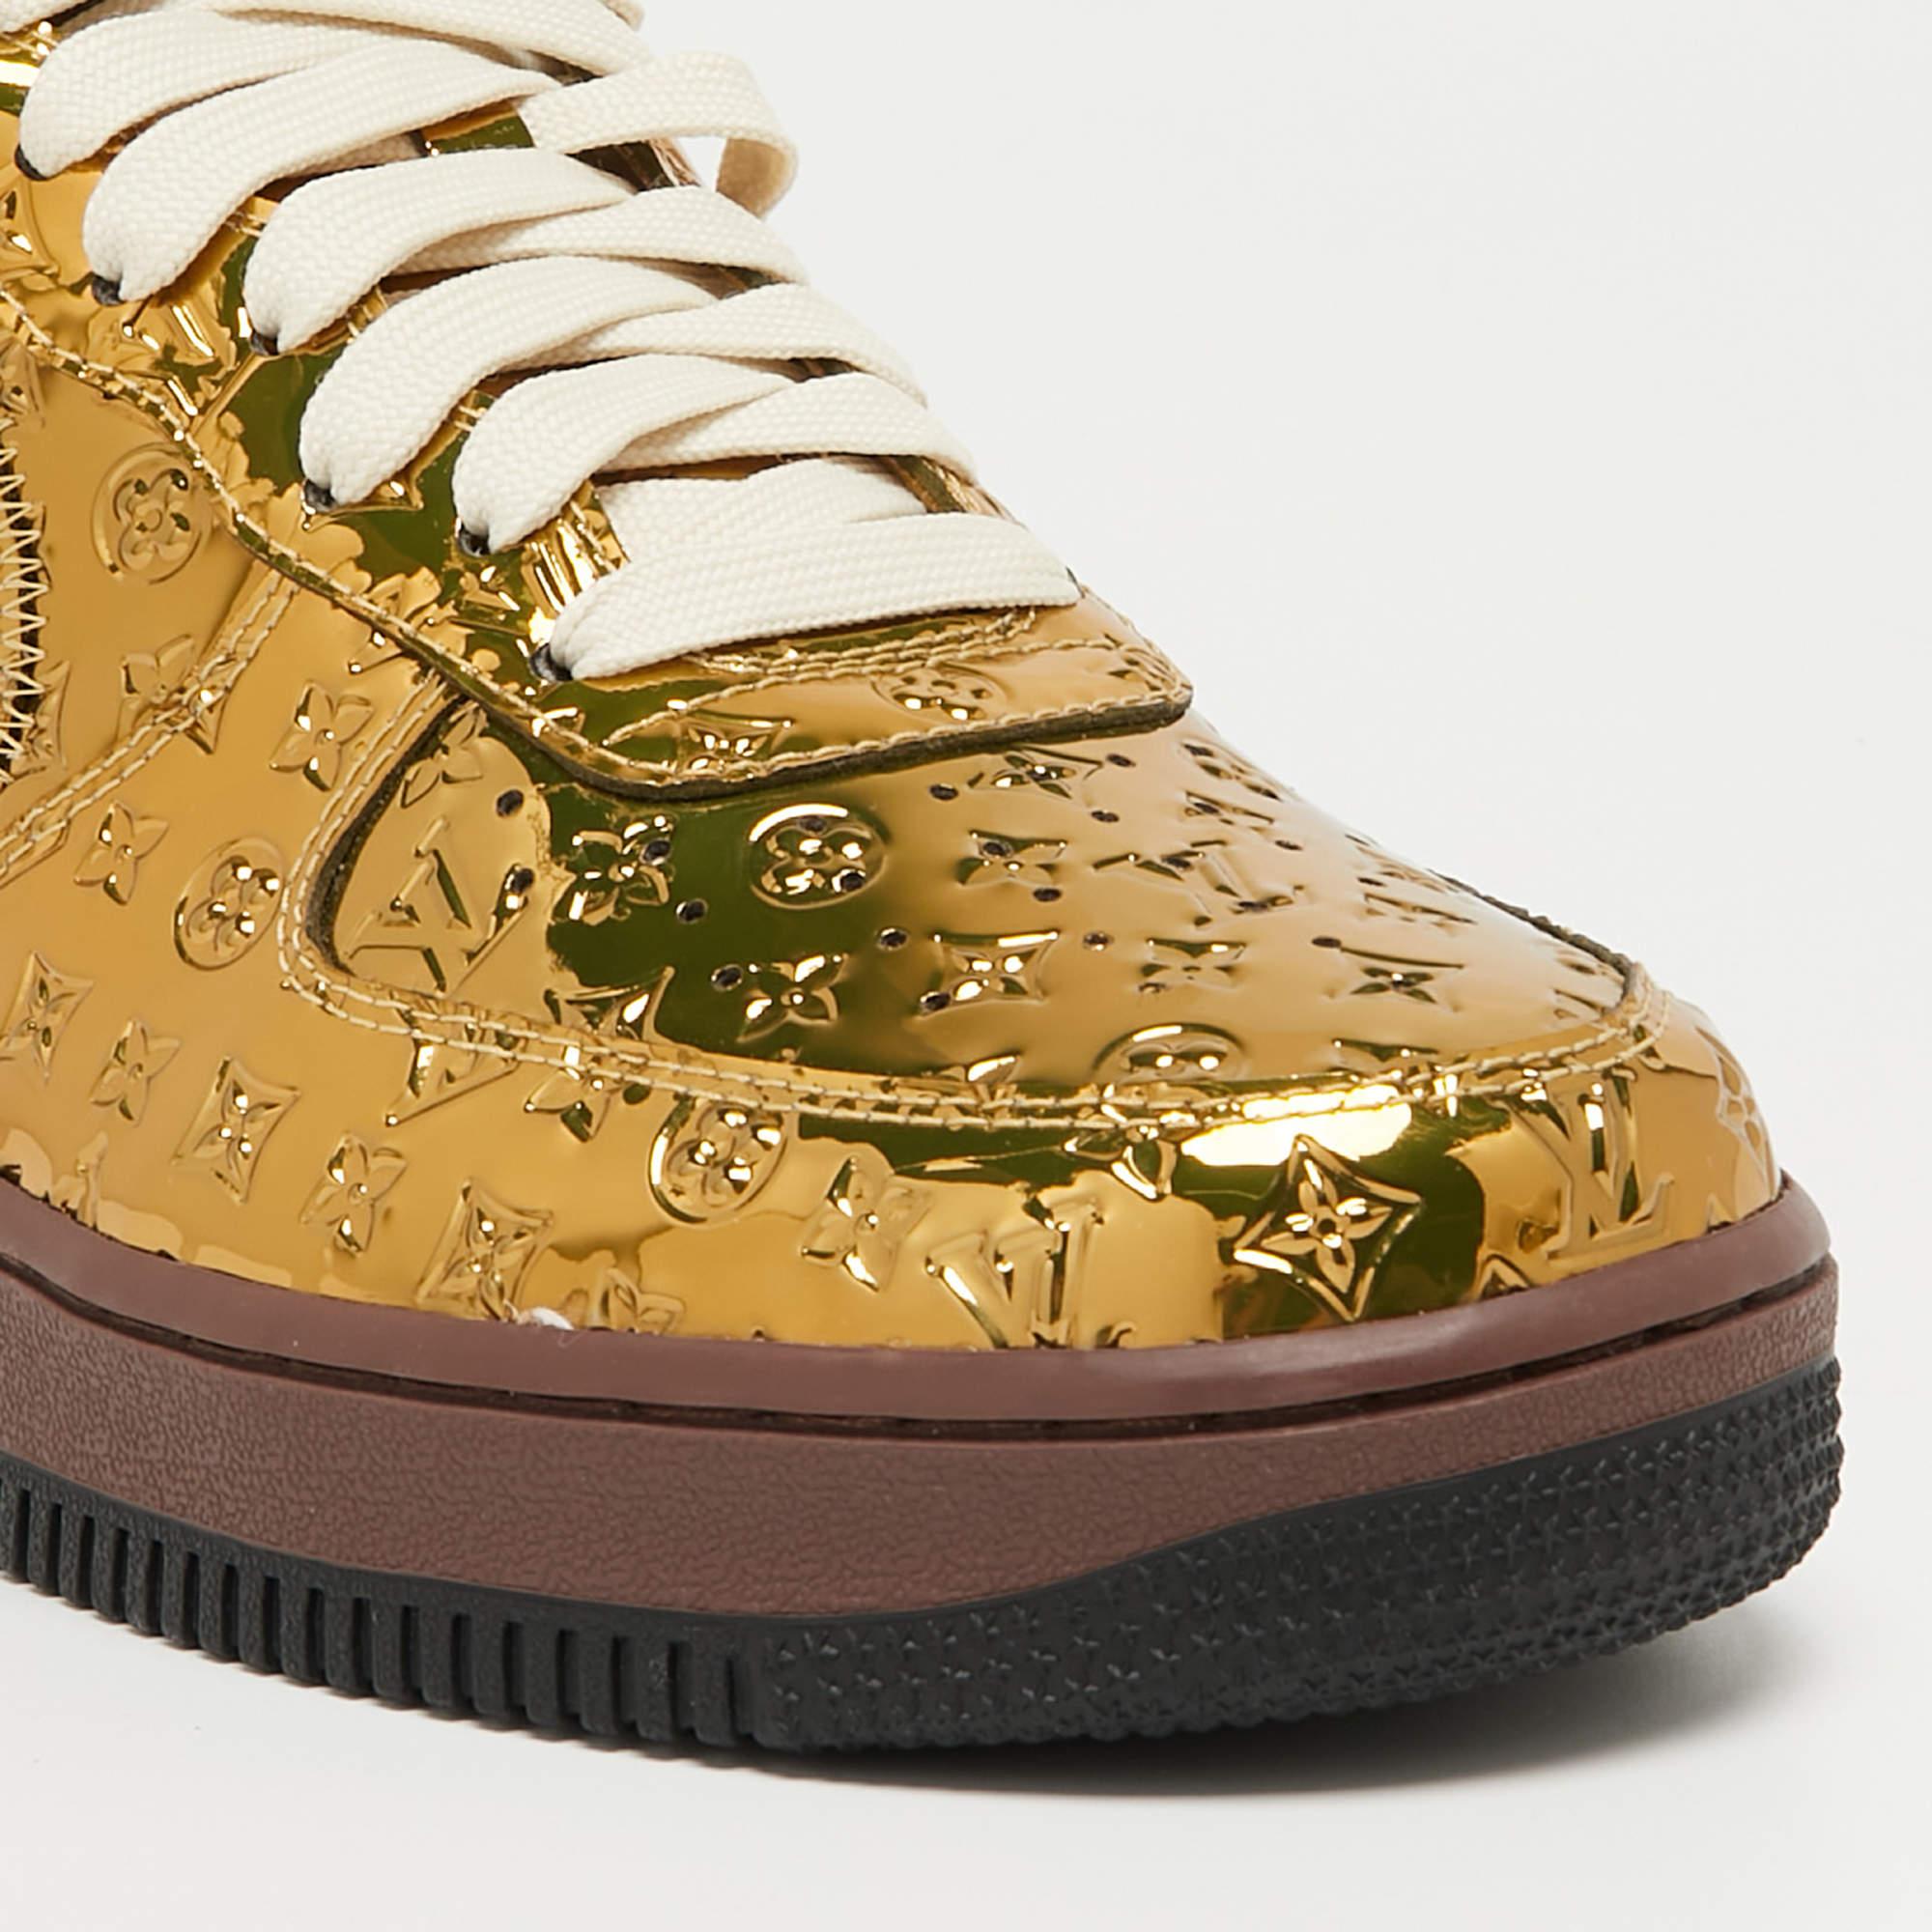 Louis Vuitton x Nike Metallic Gold Monogram Leather Air Force 1 Sneakers Size 41 2